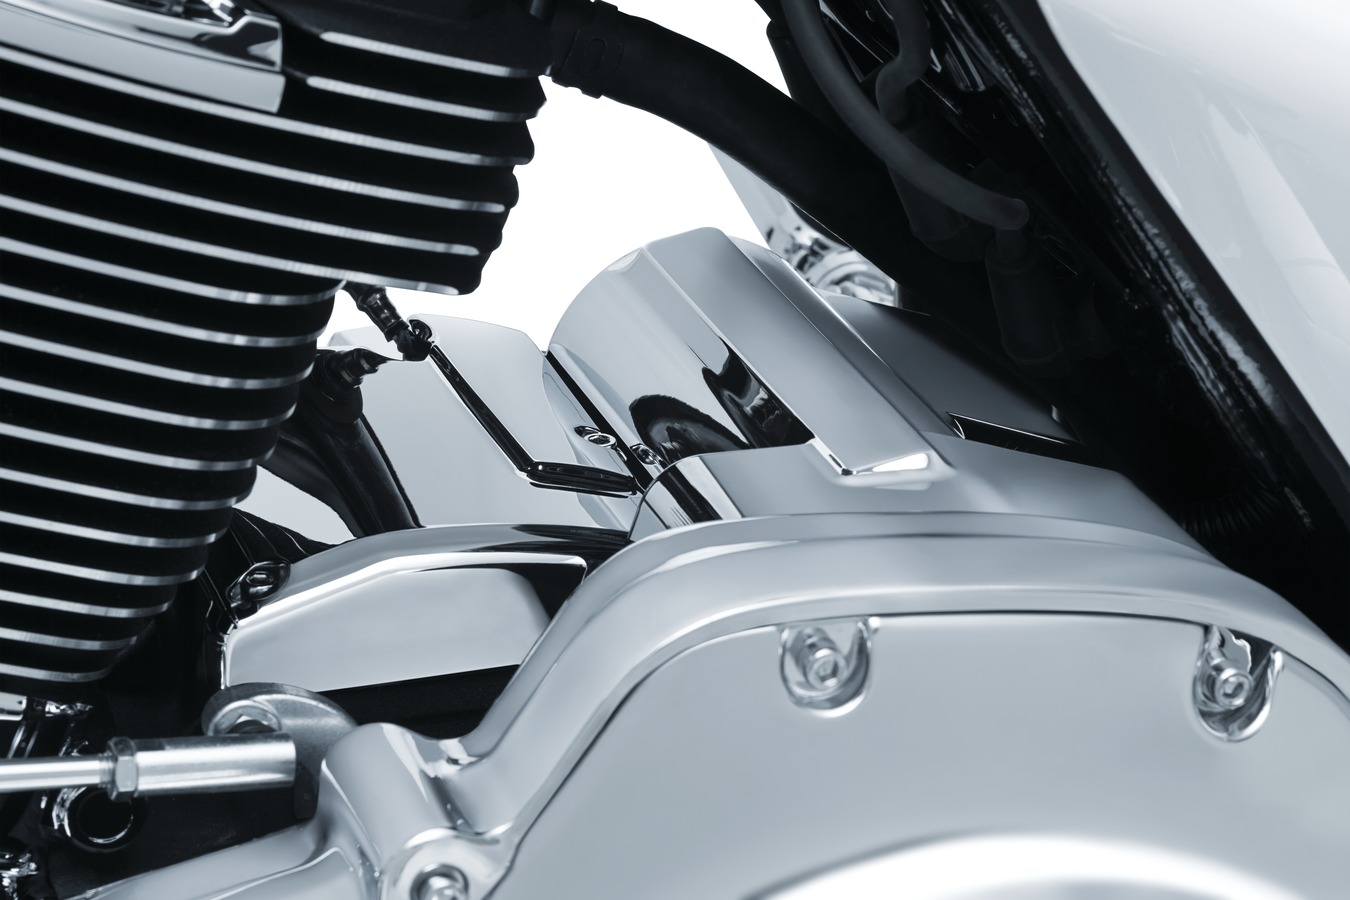 Precision Chrome Starter Cover - Harley Touring M8 - Click Image to Close